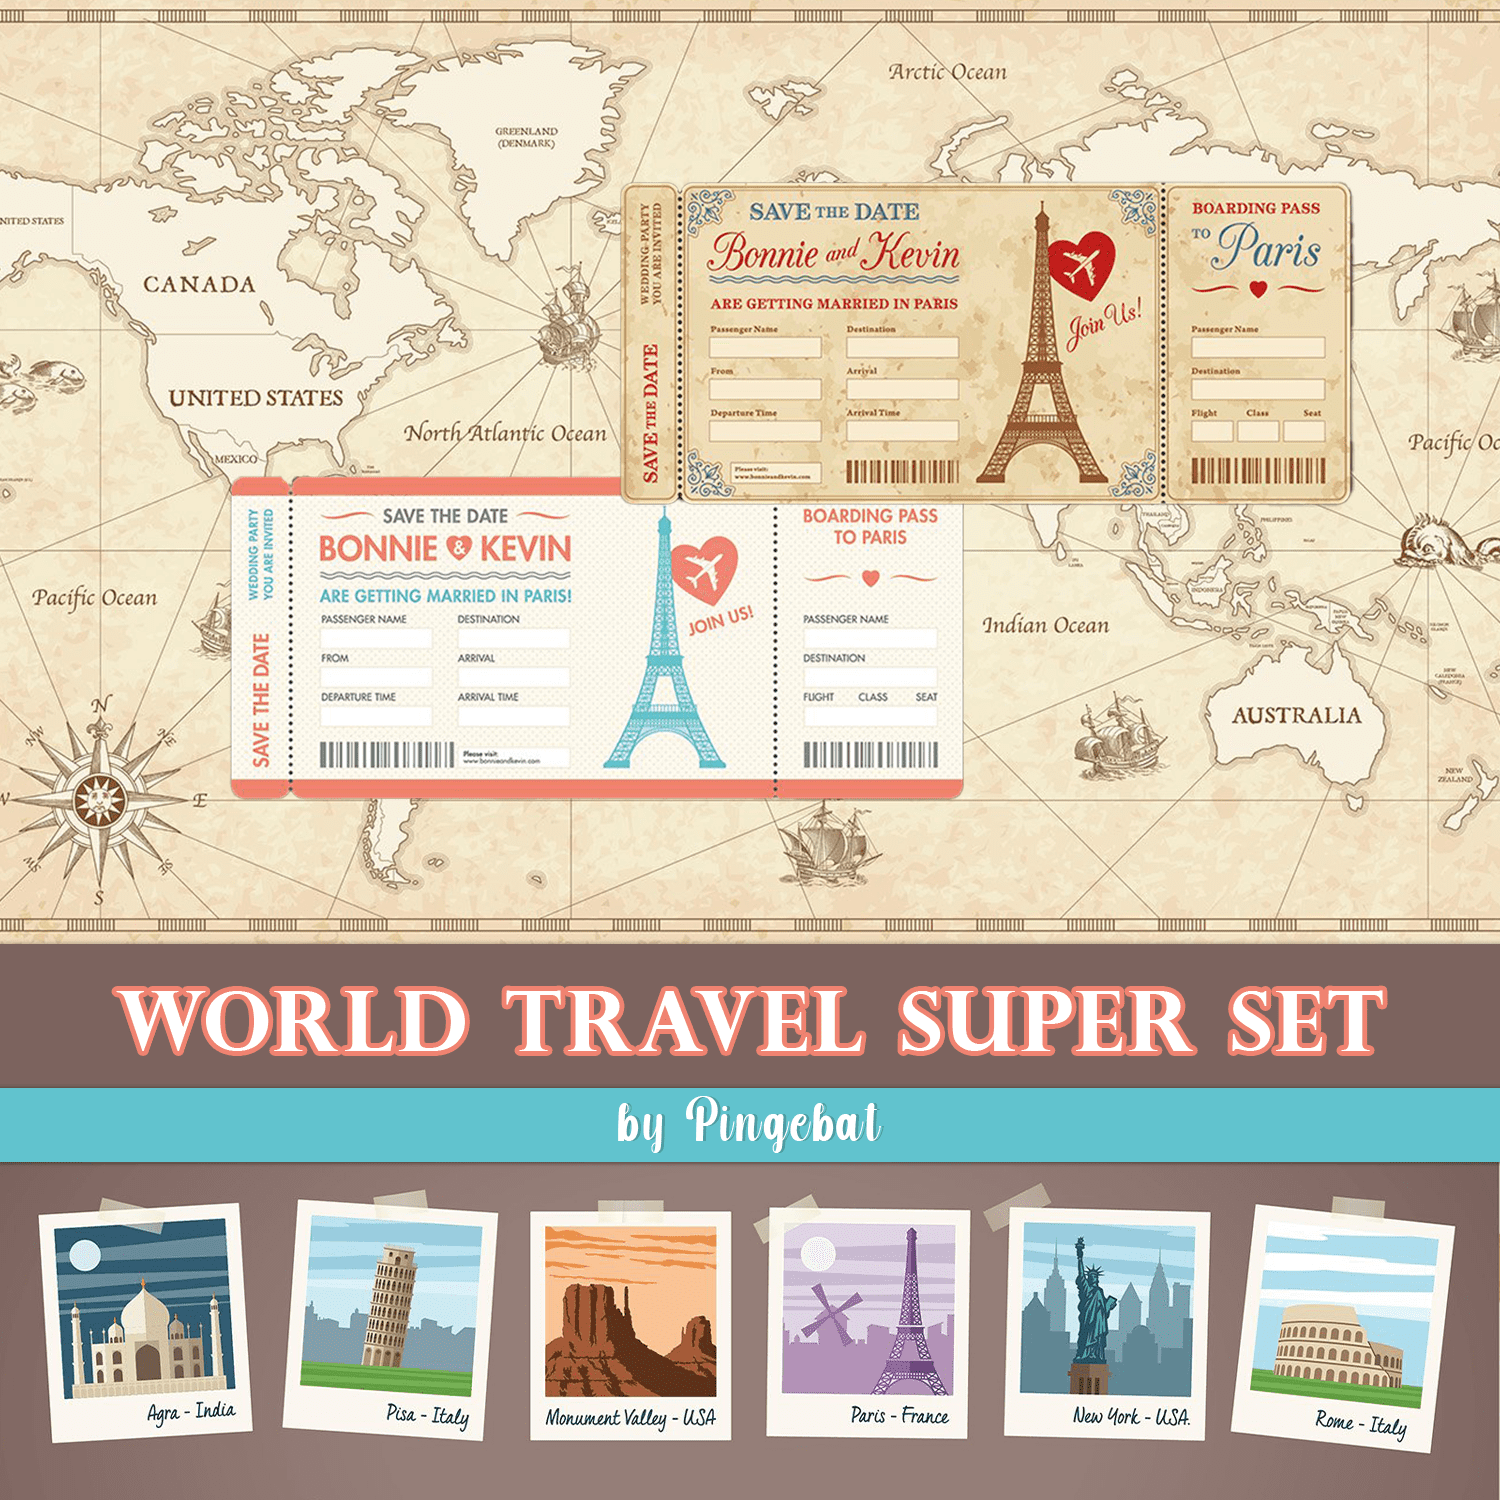 World Travel Super Set cover.